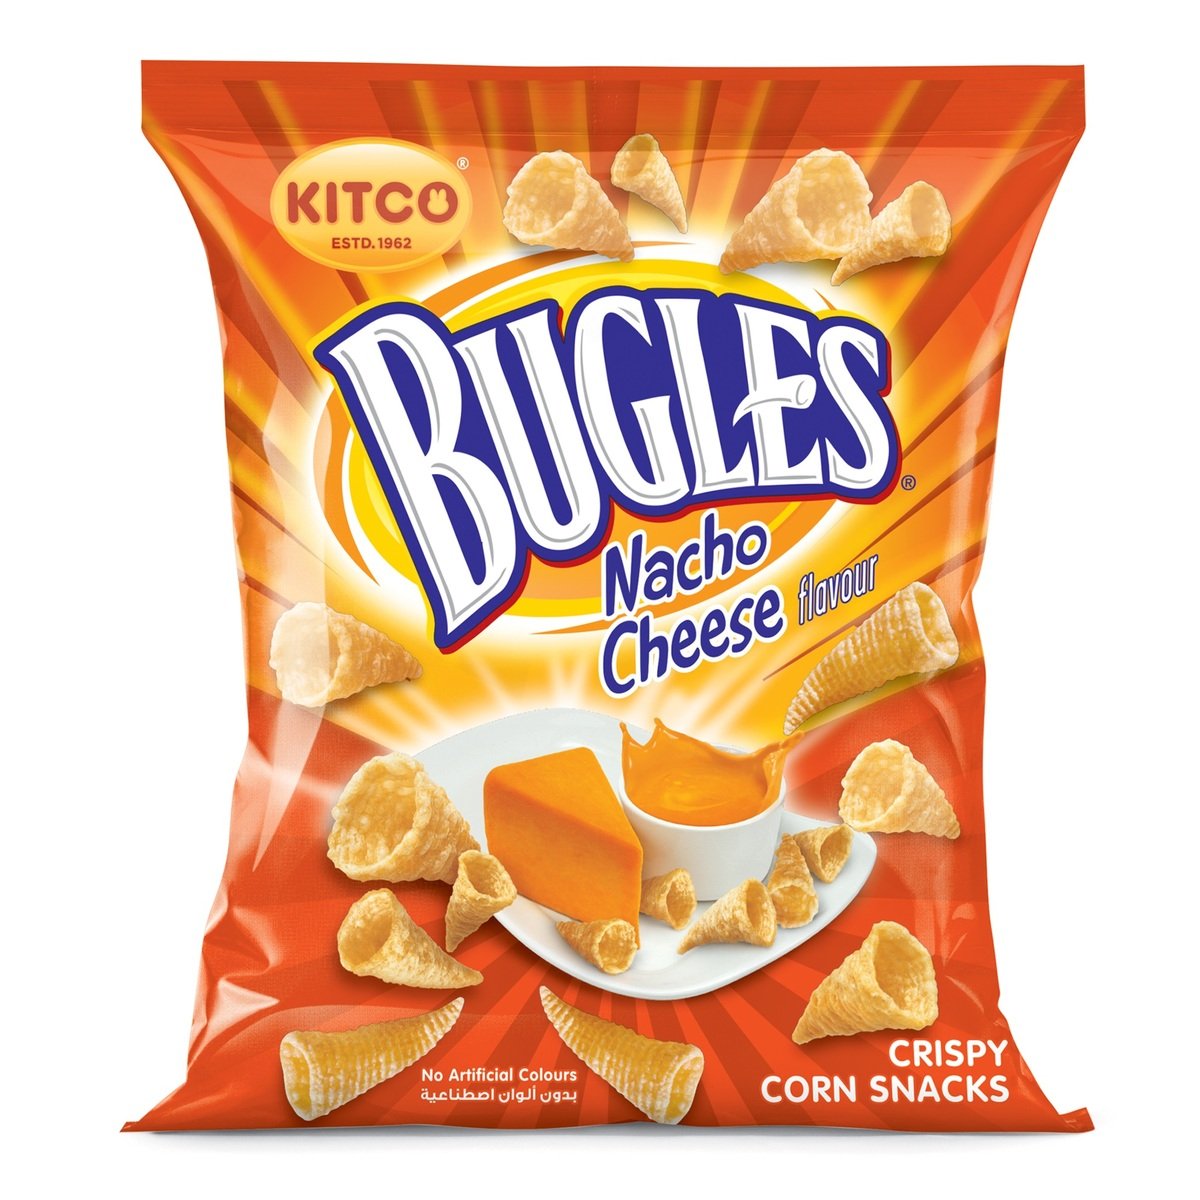 Kitco Bugles Nacho Cheese 30g Online At Best Price Corn Based Bags Lulu Kuwait 1696